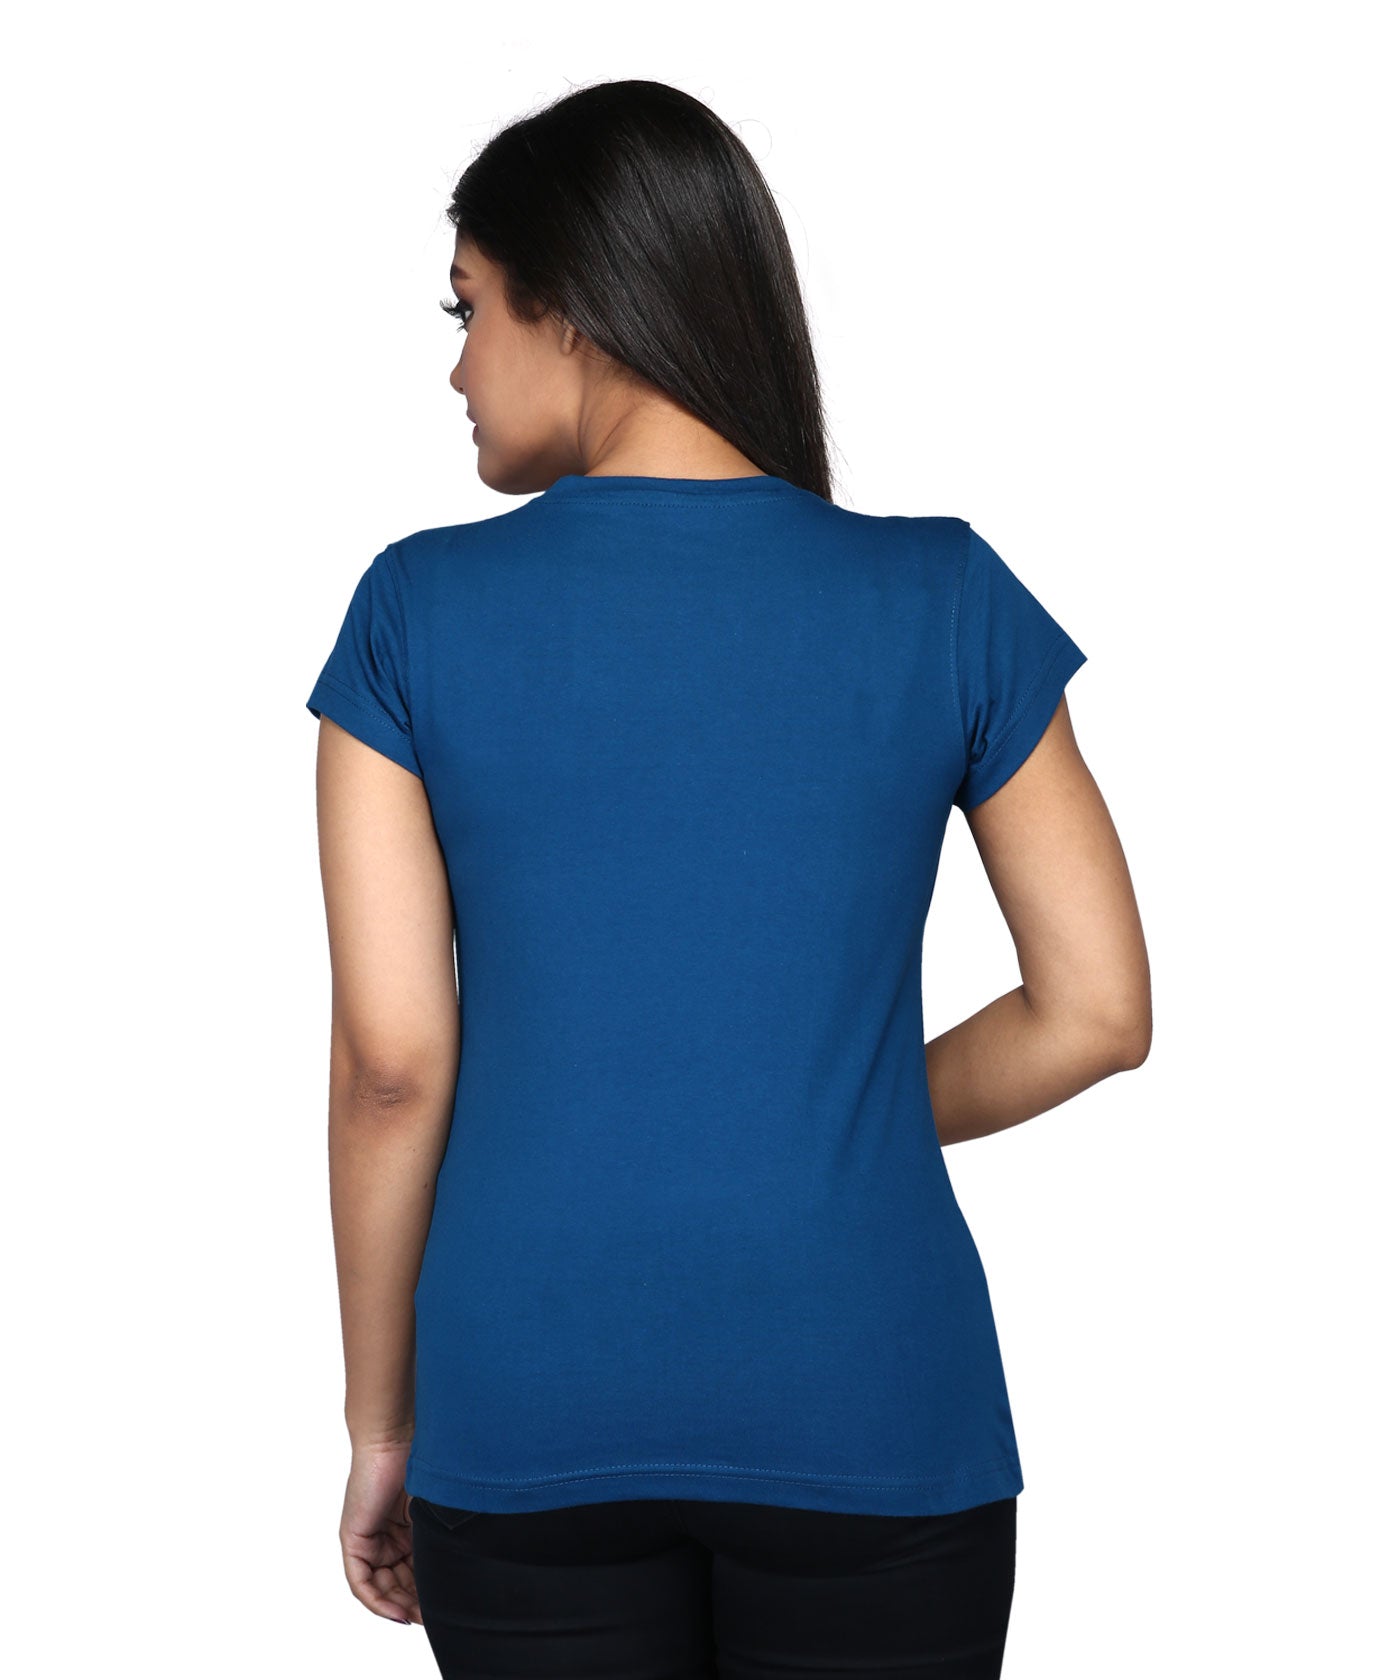 Double Line Border - Block Print Tees for Women - Intense Blue